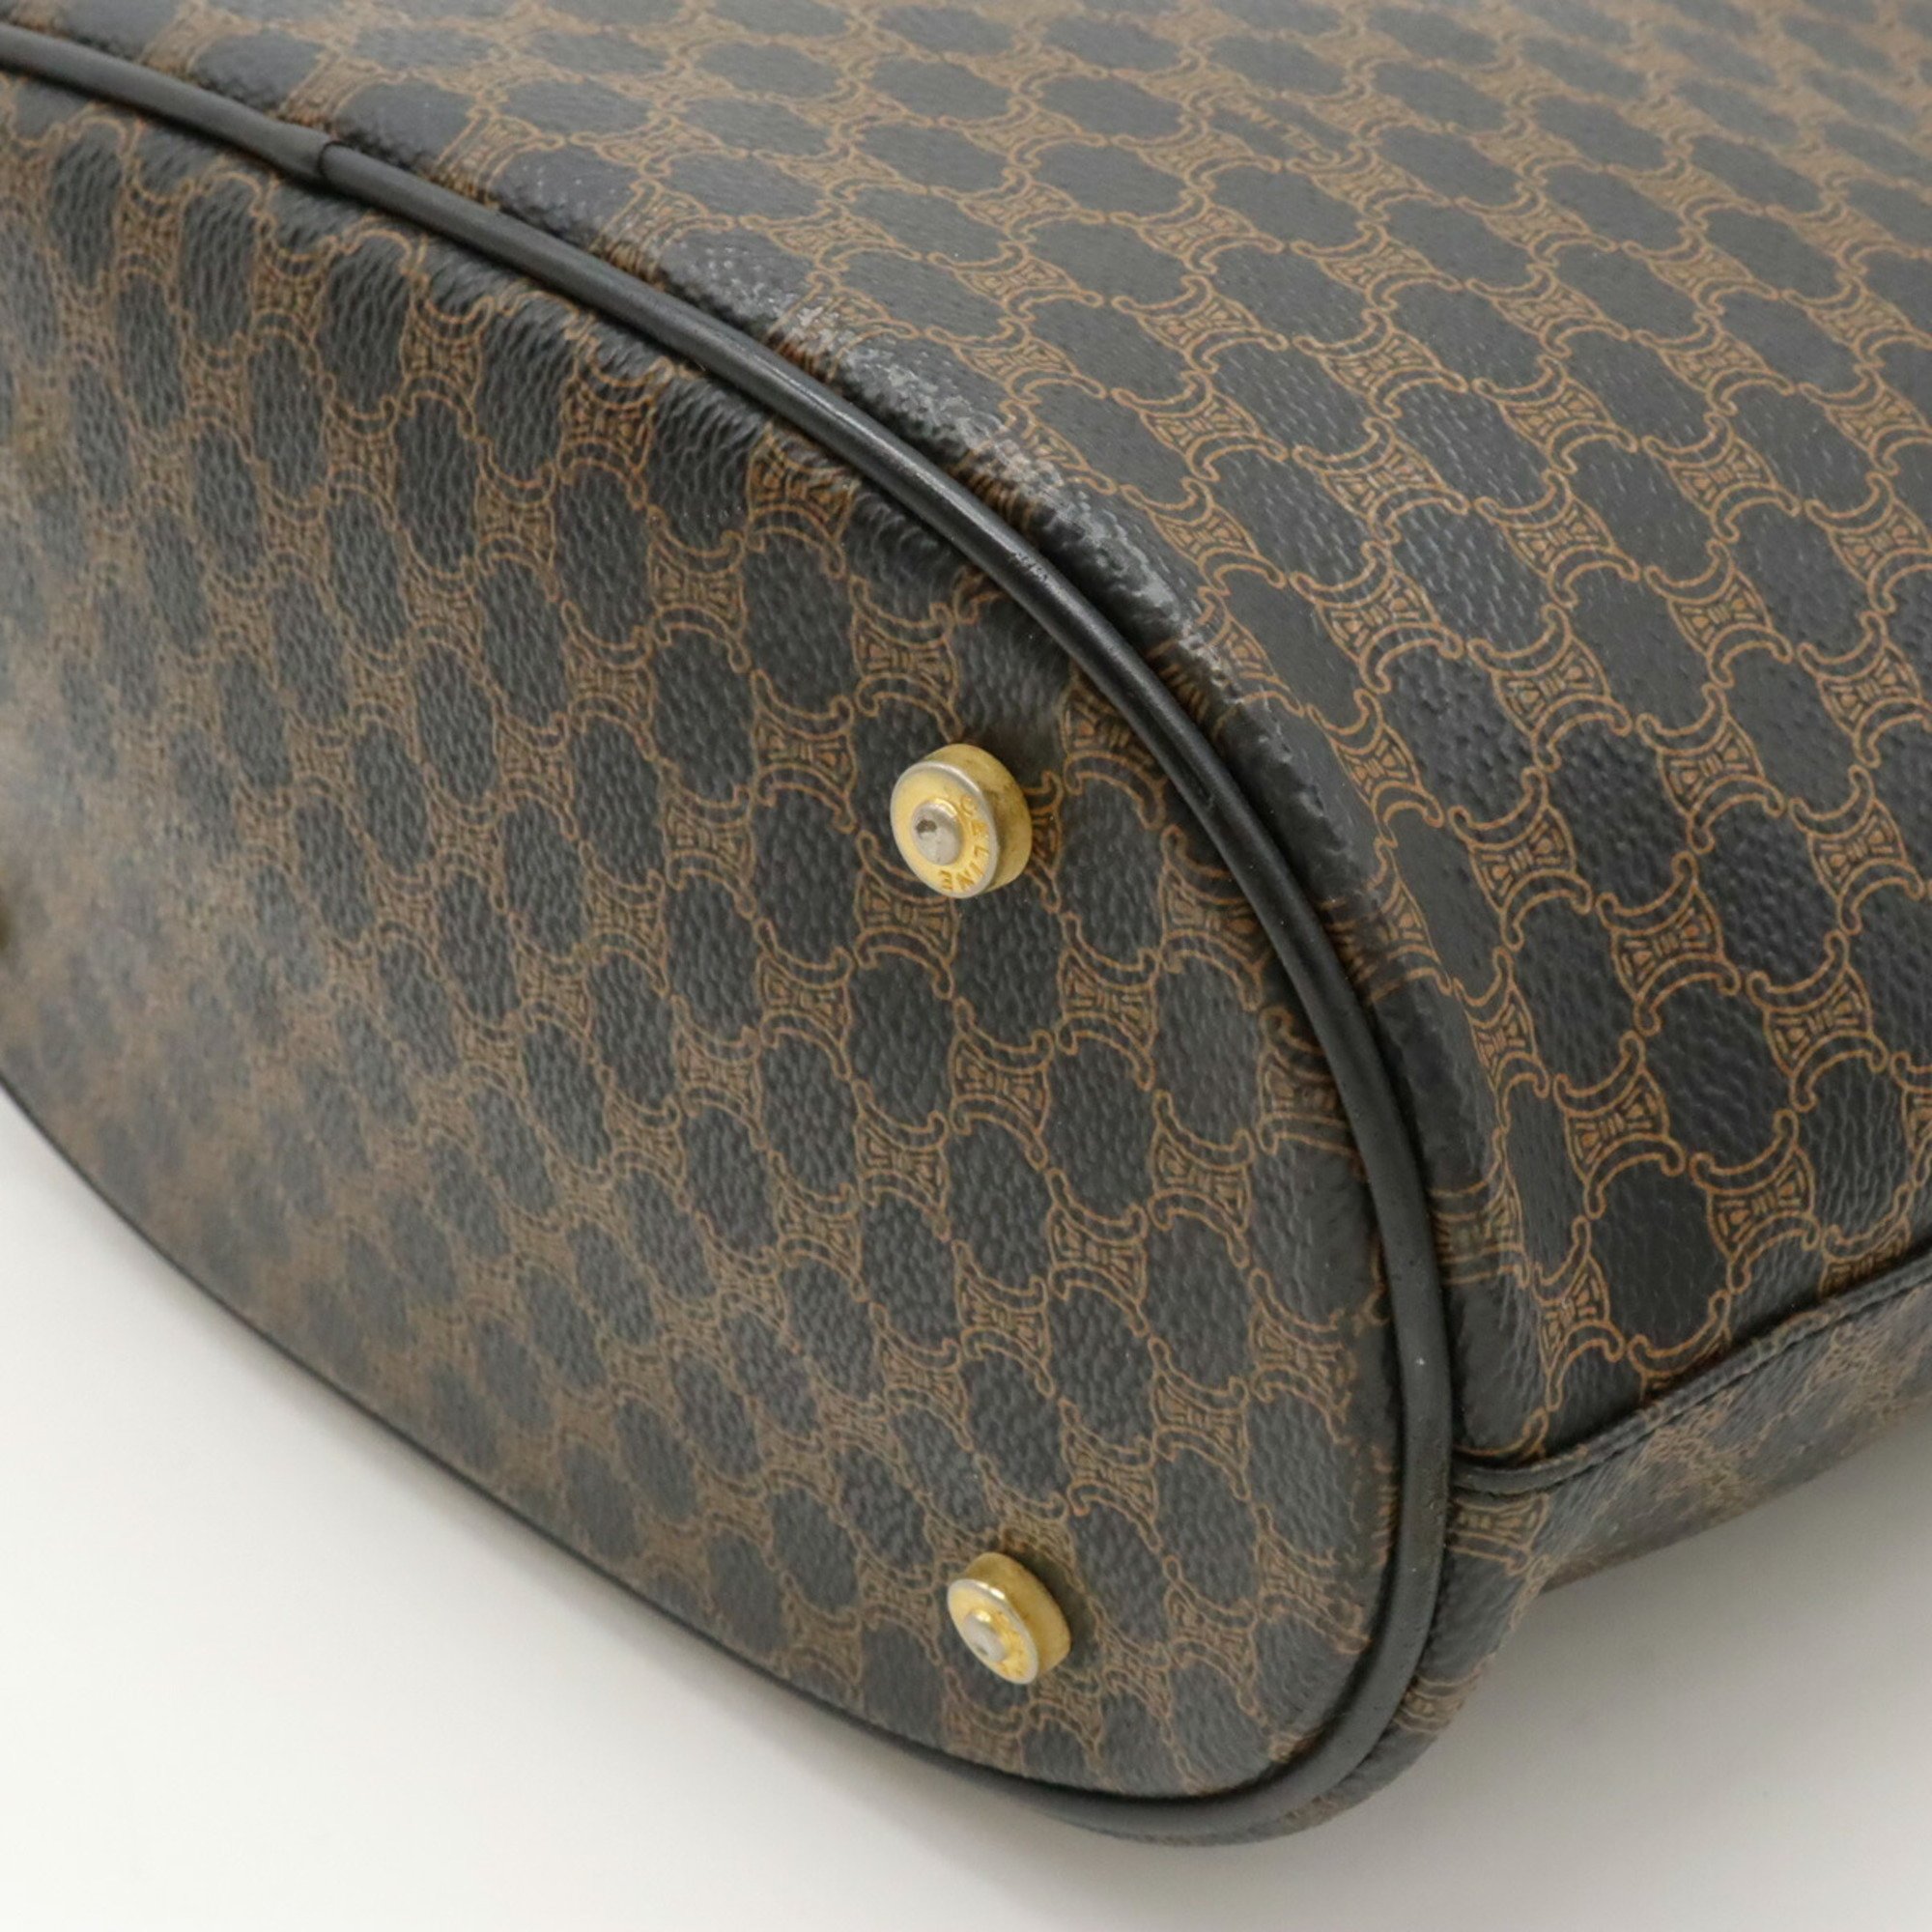 CELINE Macadam pattern blazon tote bag shoulder PVC leather black brown